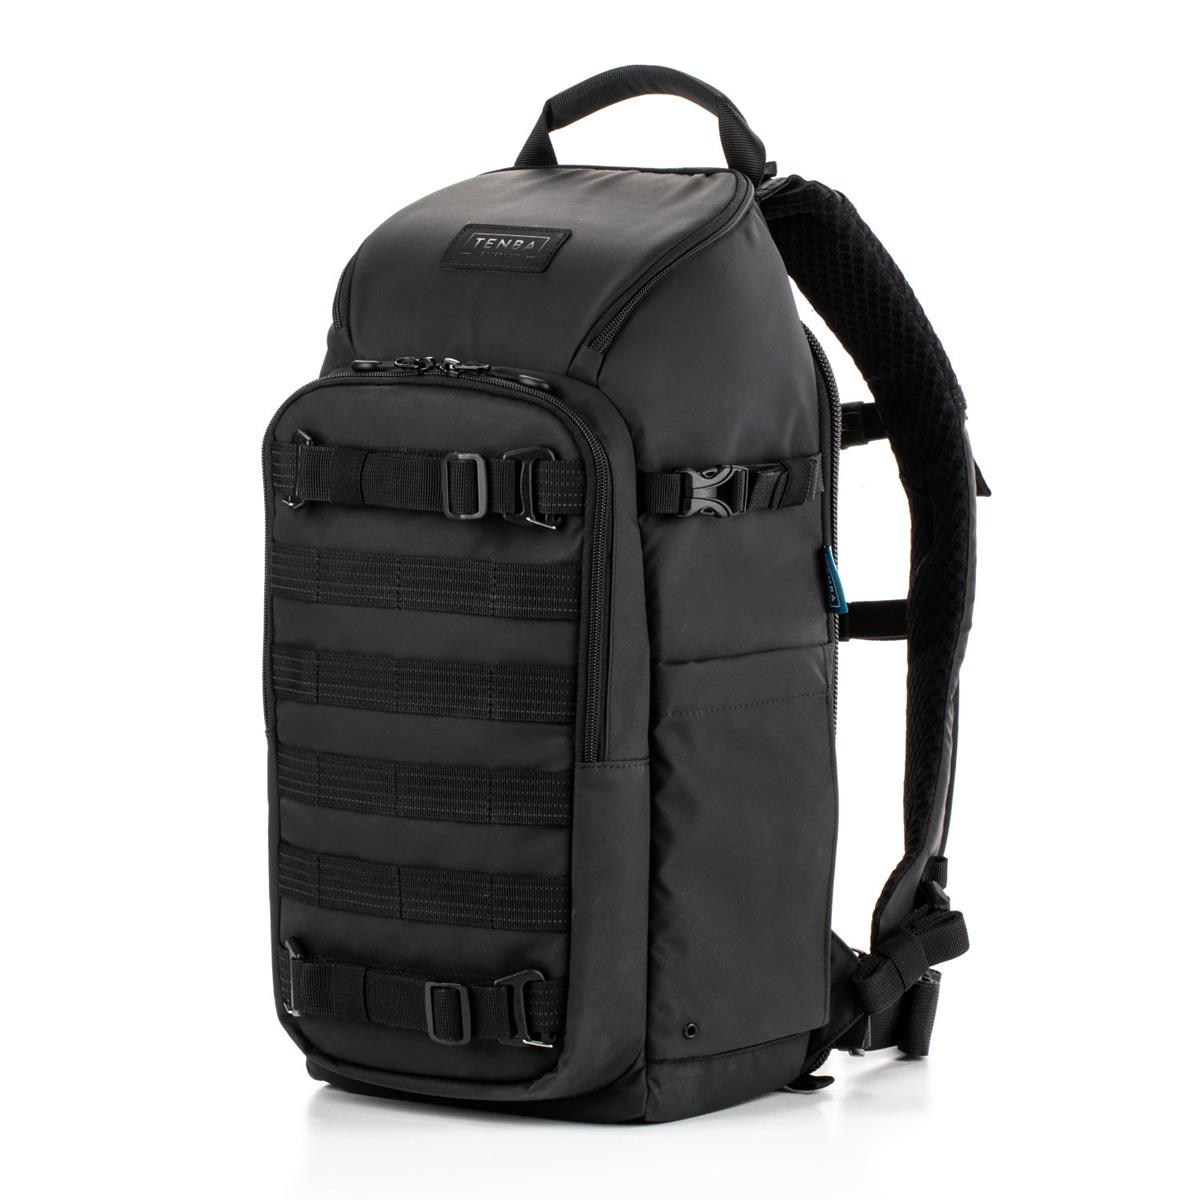 Image of Tenba Axis V2 16L Camera Backpack